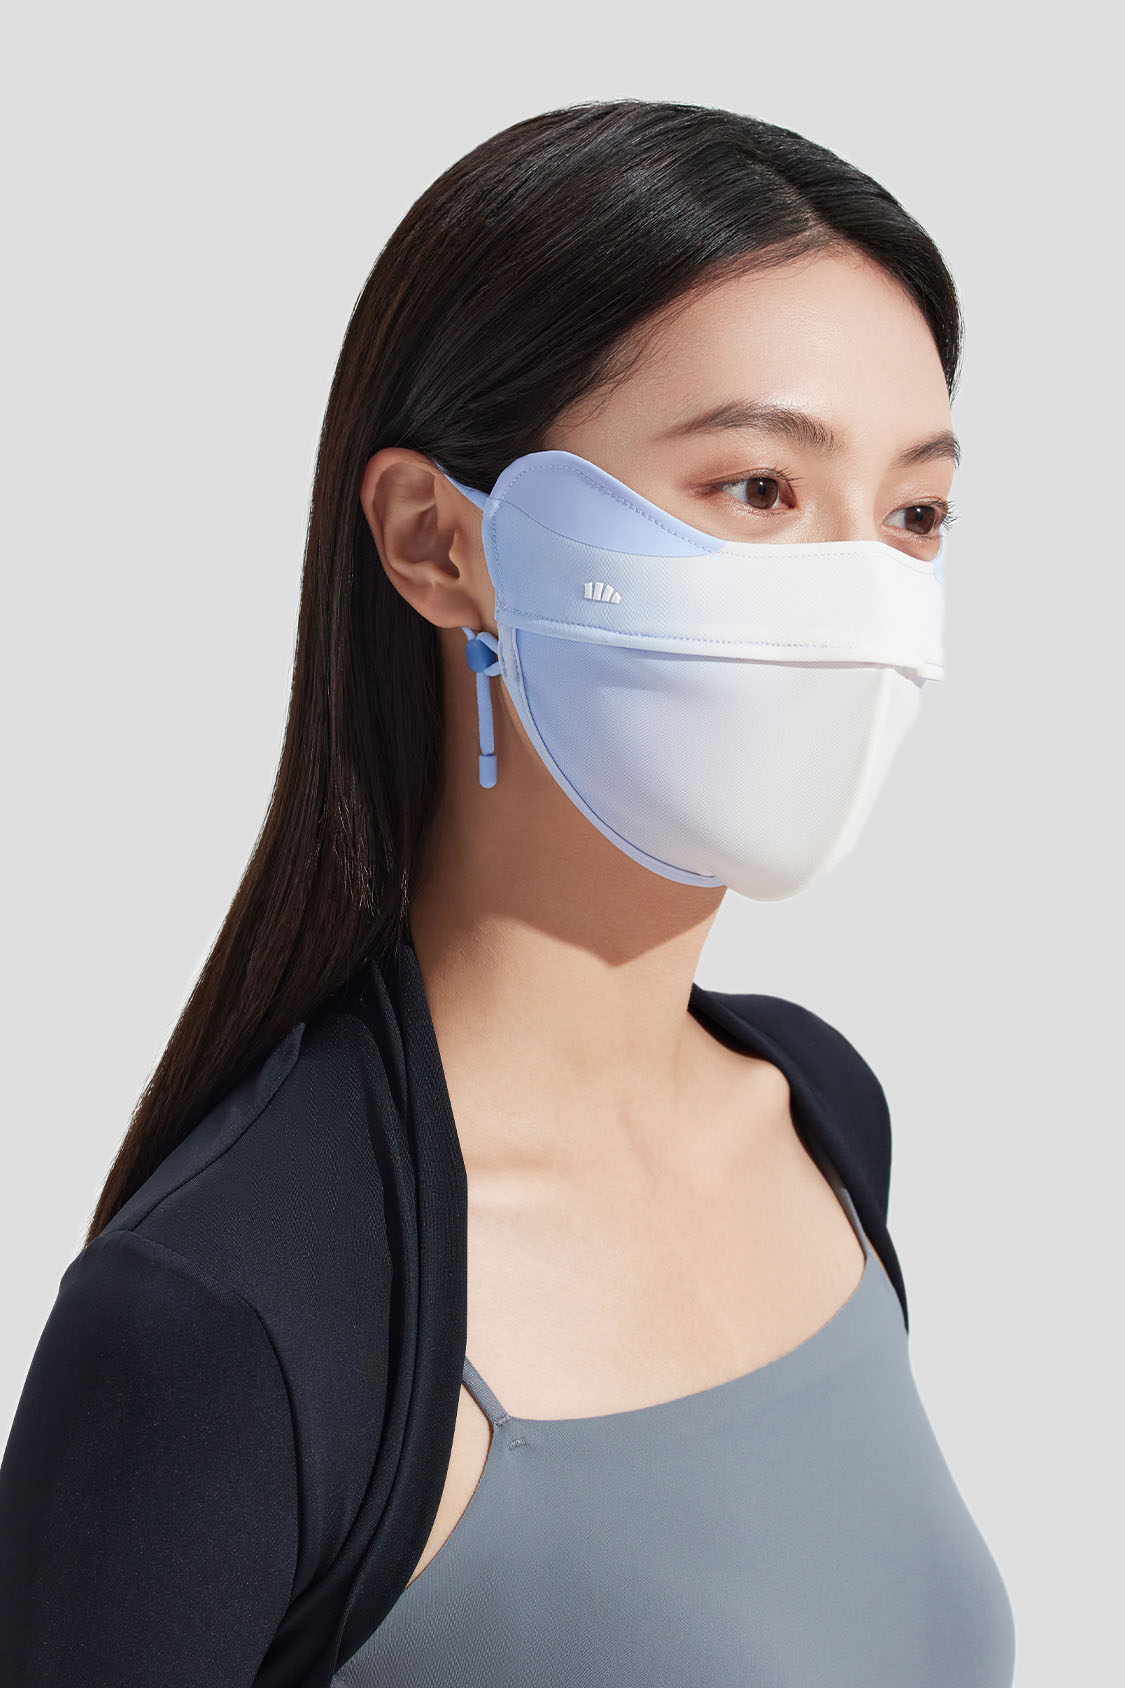 UV Protection Face Mask, Beneunder Face Cover UPF 50+ for Women One Size - Adjustable / Sunset Orange